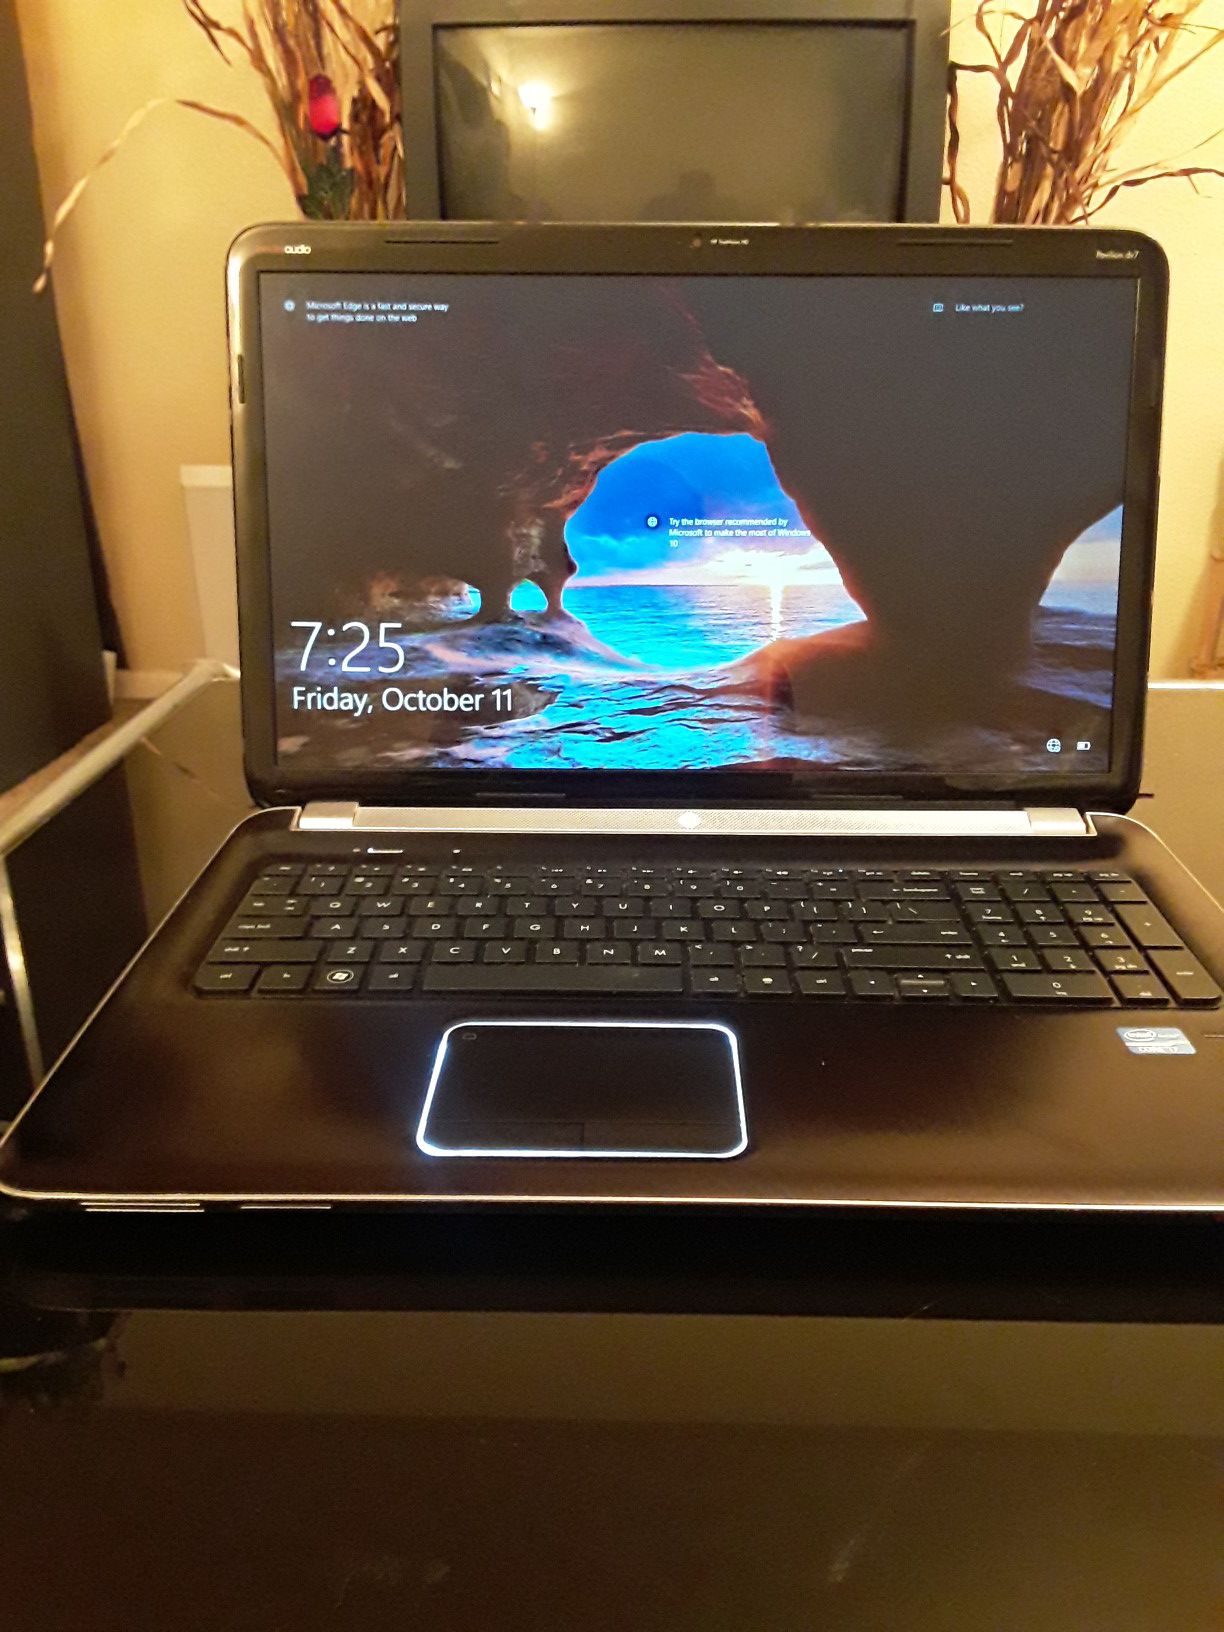 HP Pavilion 17" Notebook PC, Black Laptop, Beats Audio, Like NEW